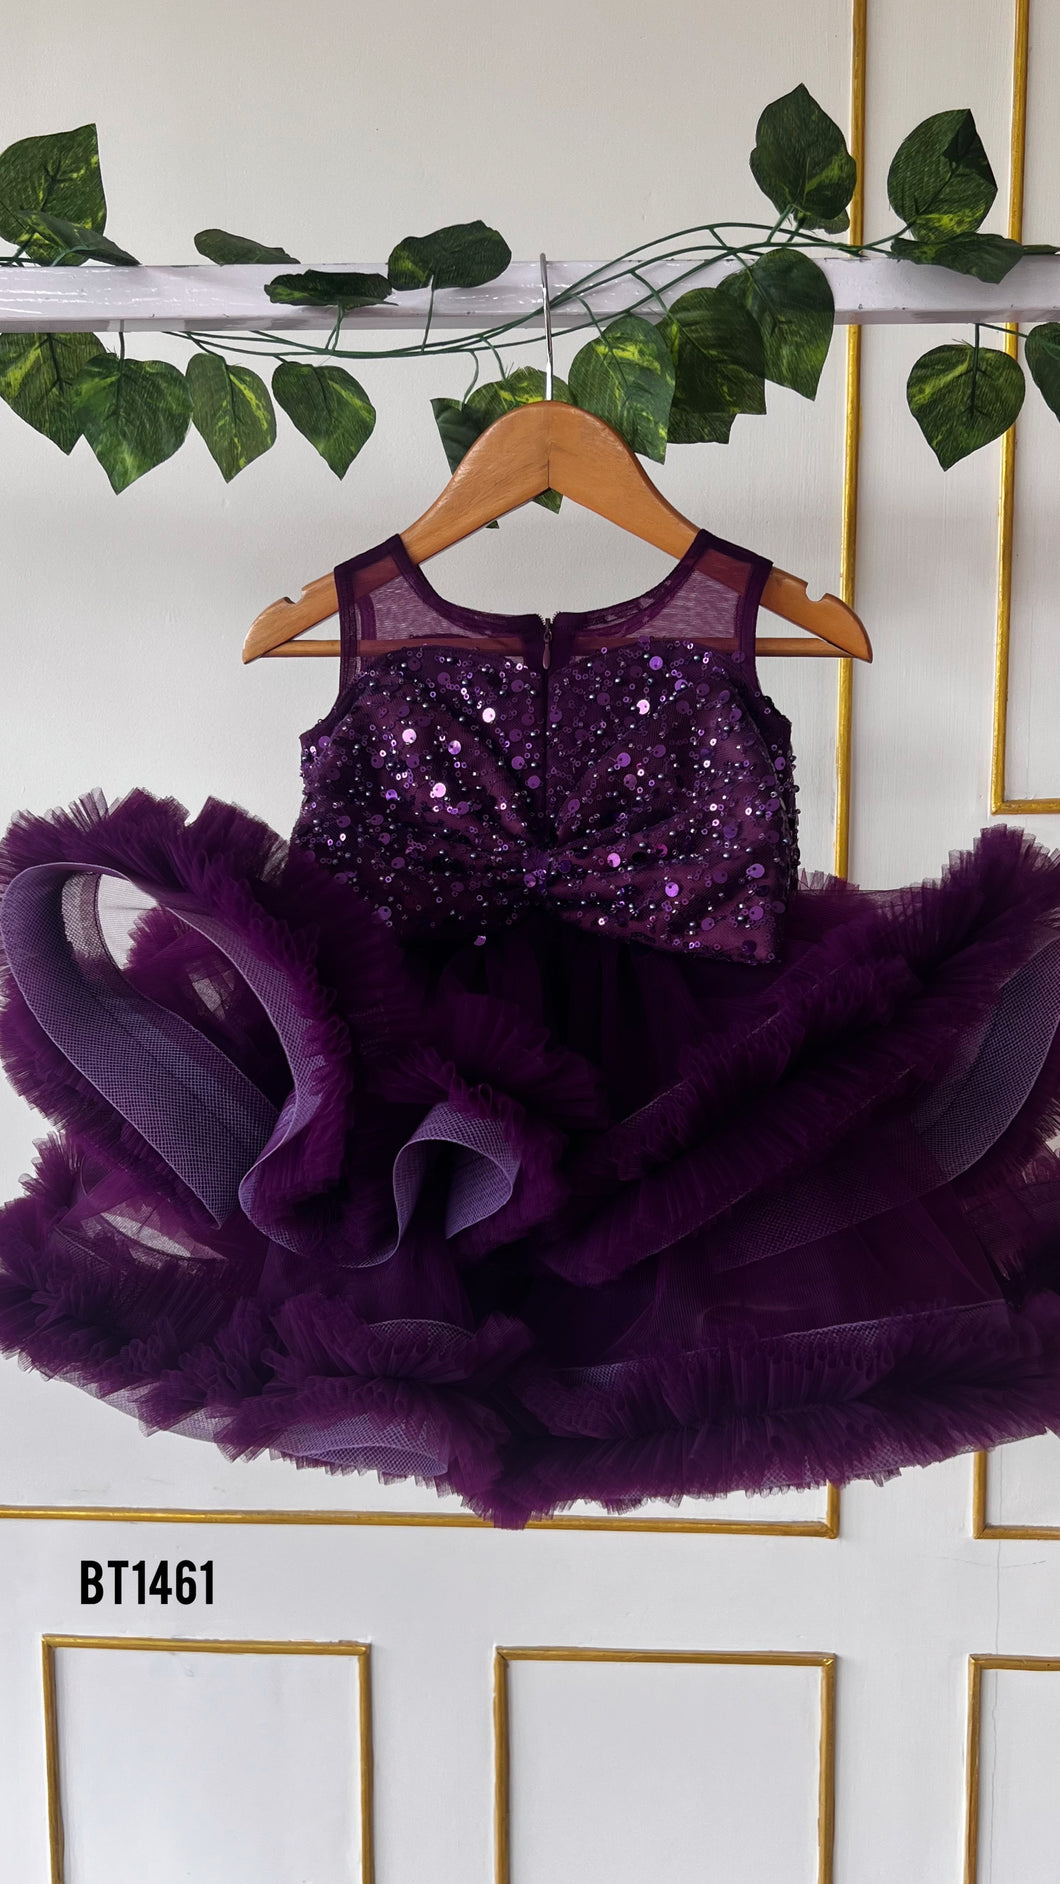 BT1461 Regal Purple Party Dress – A Royal Twist to Celebration!